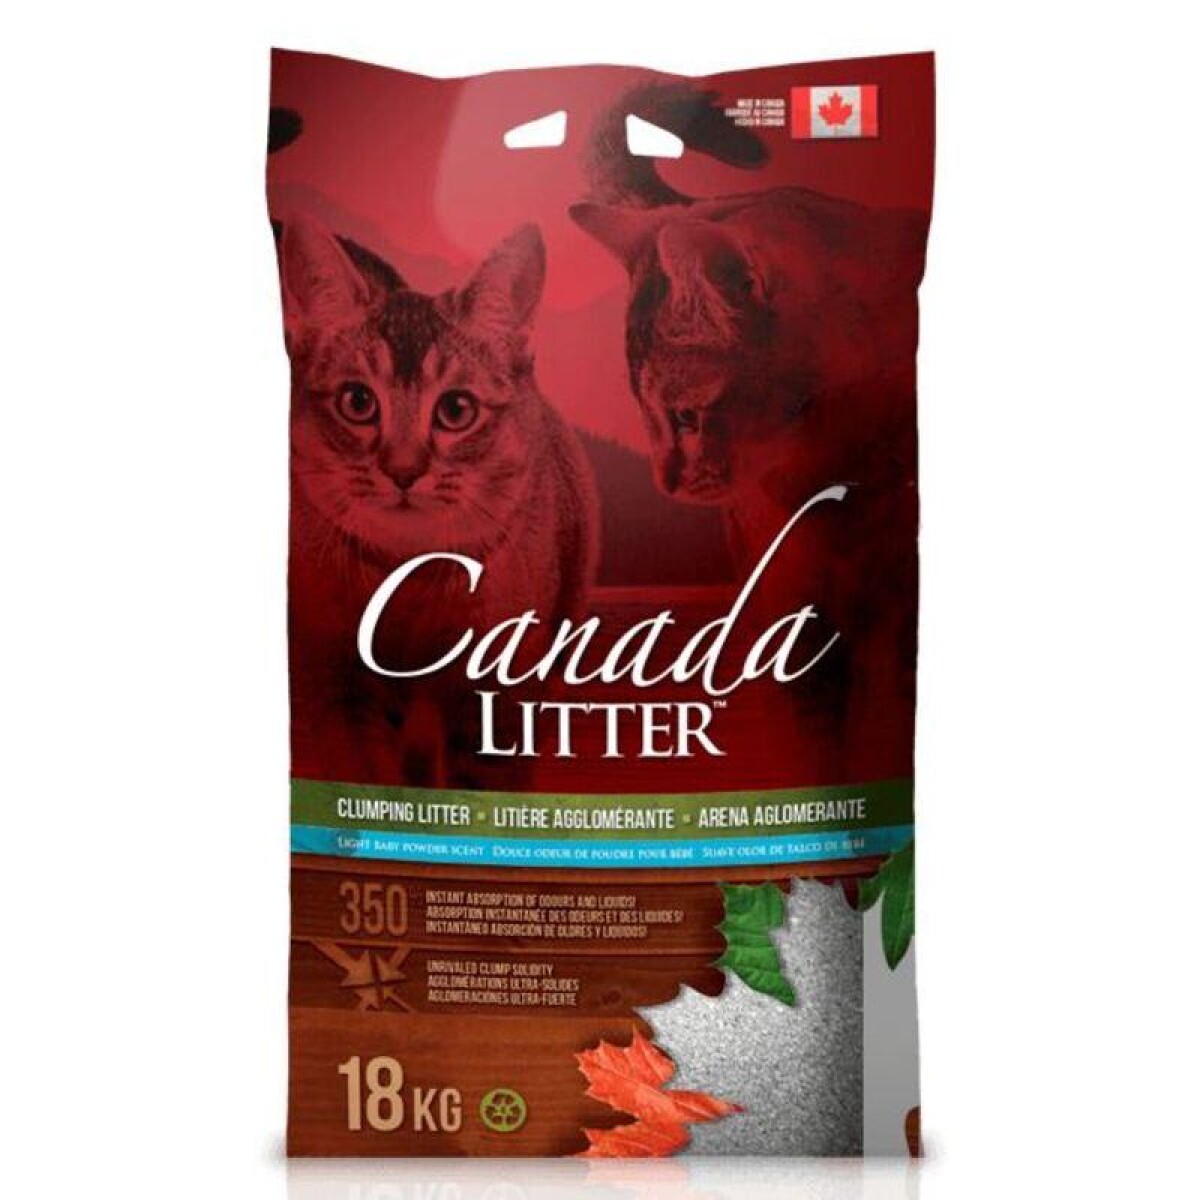 CANADA LITTER 18KG - Canada Litter 18kg 